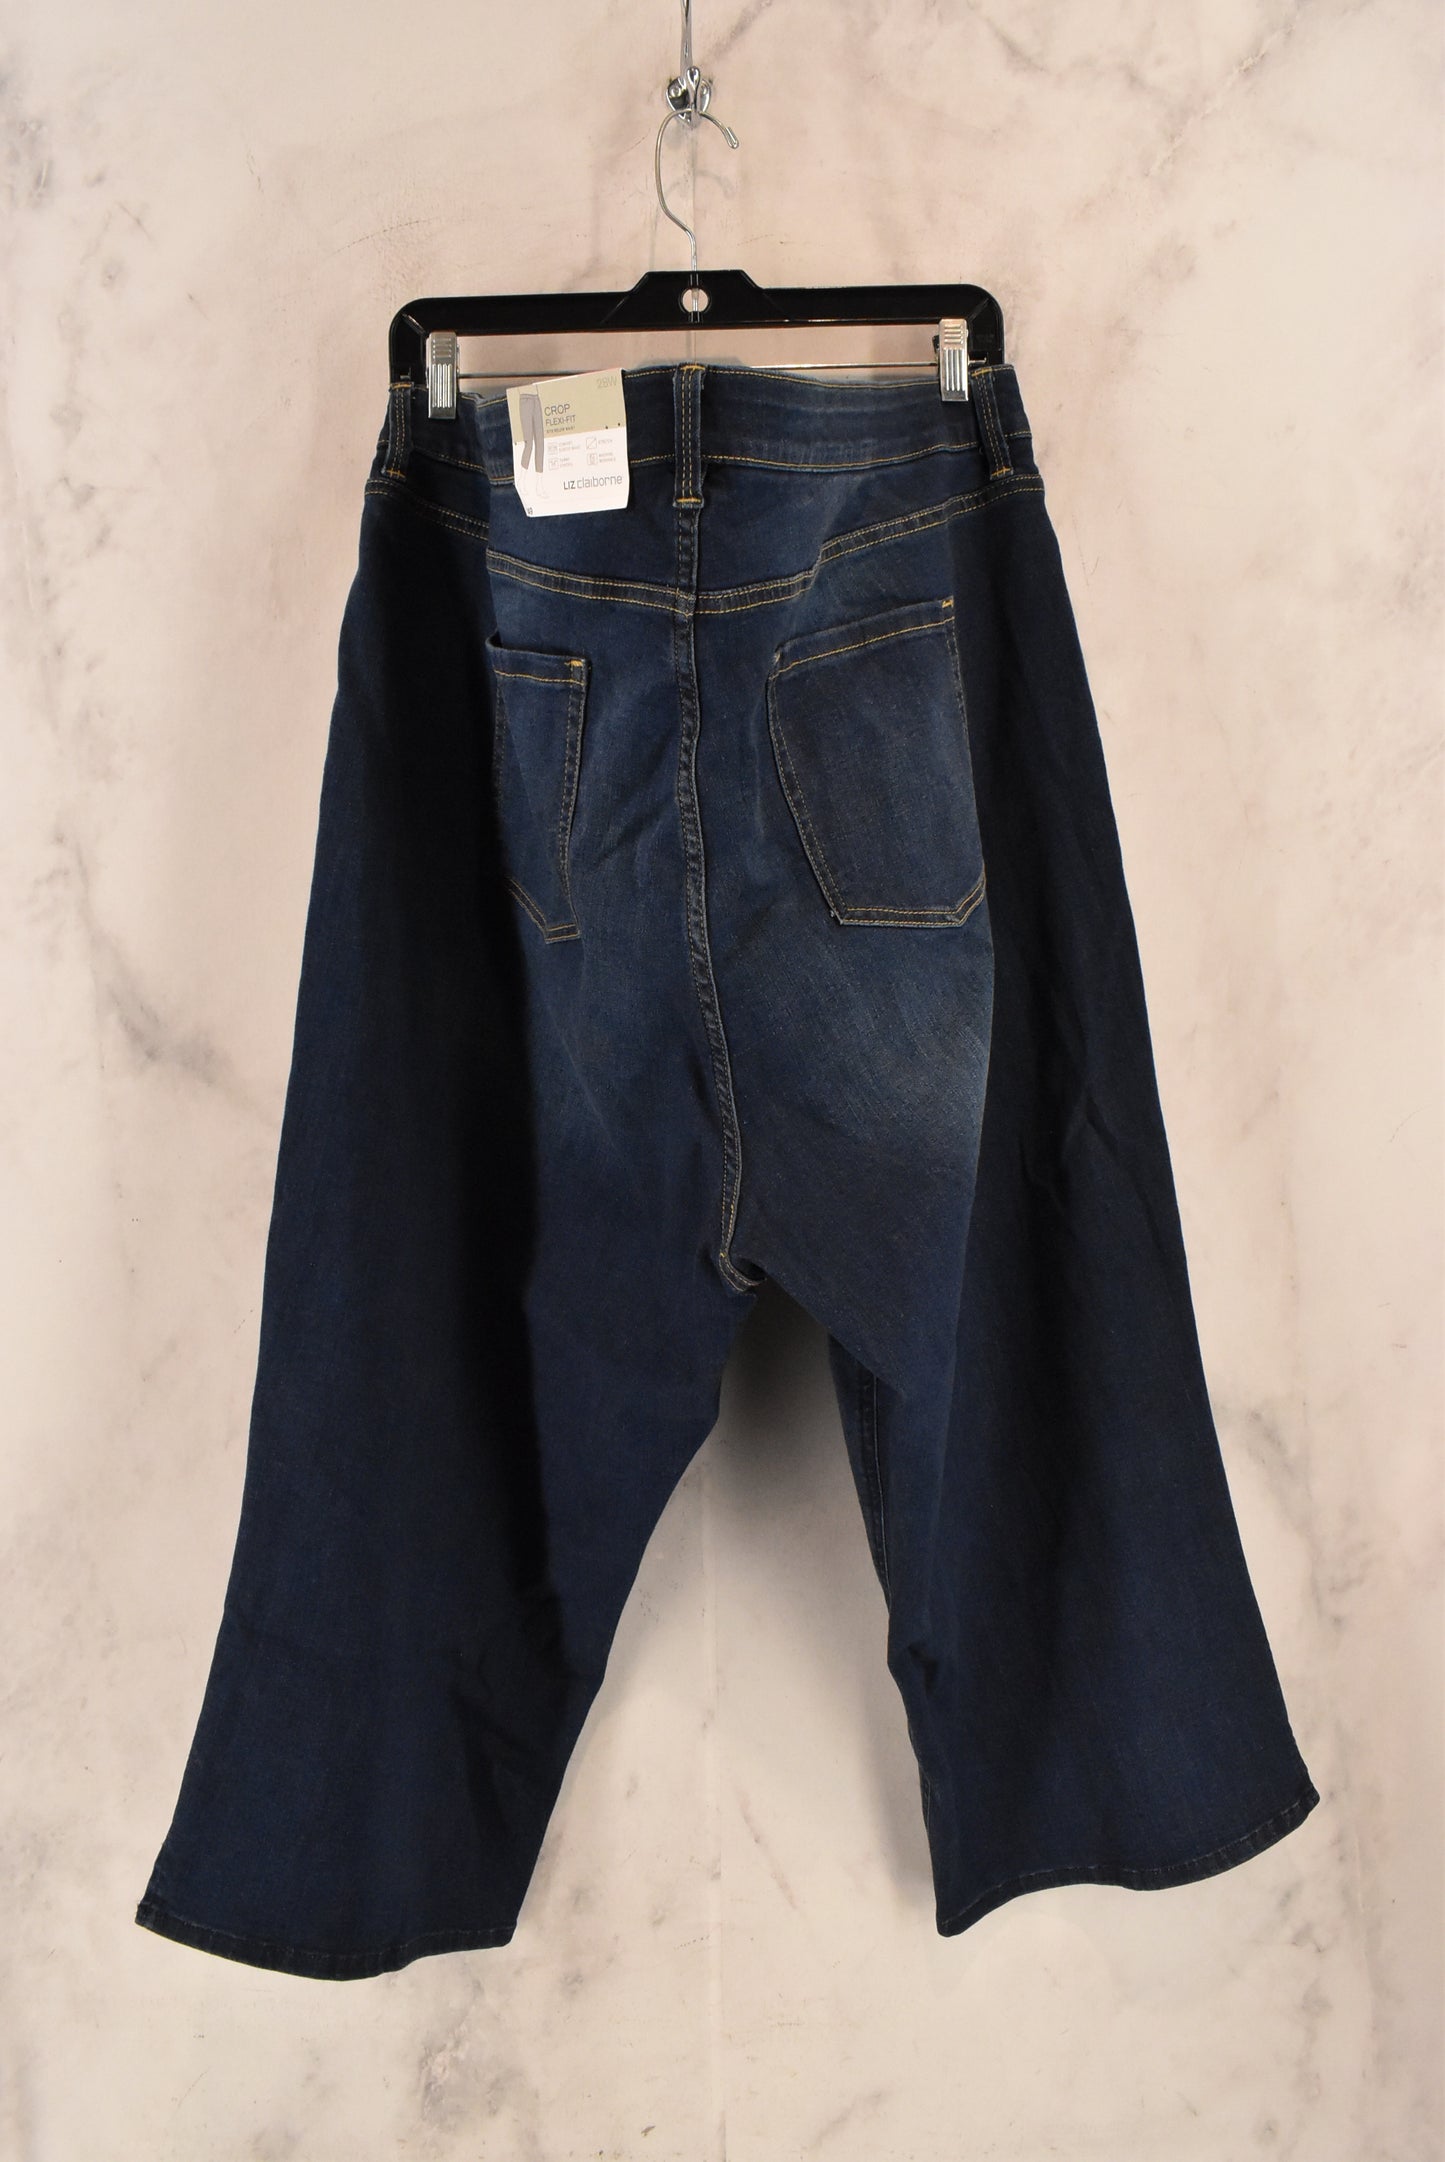 Jeans Cropped By Liz Claiborne  Size: 28